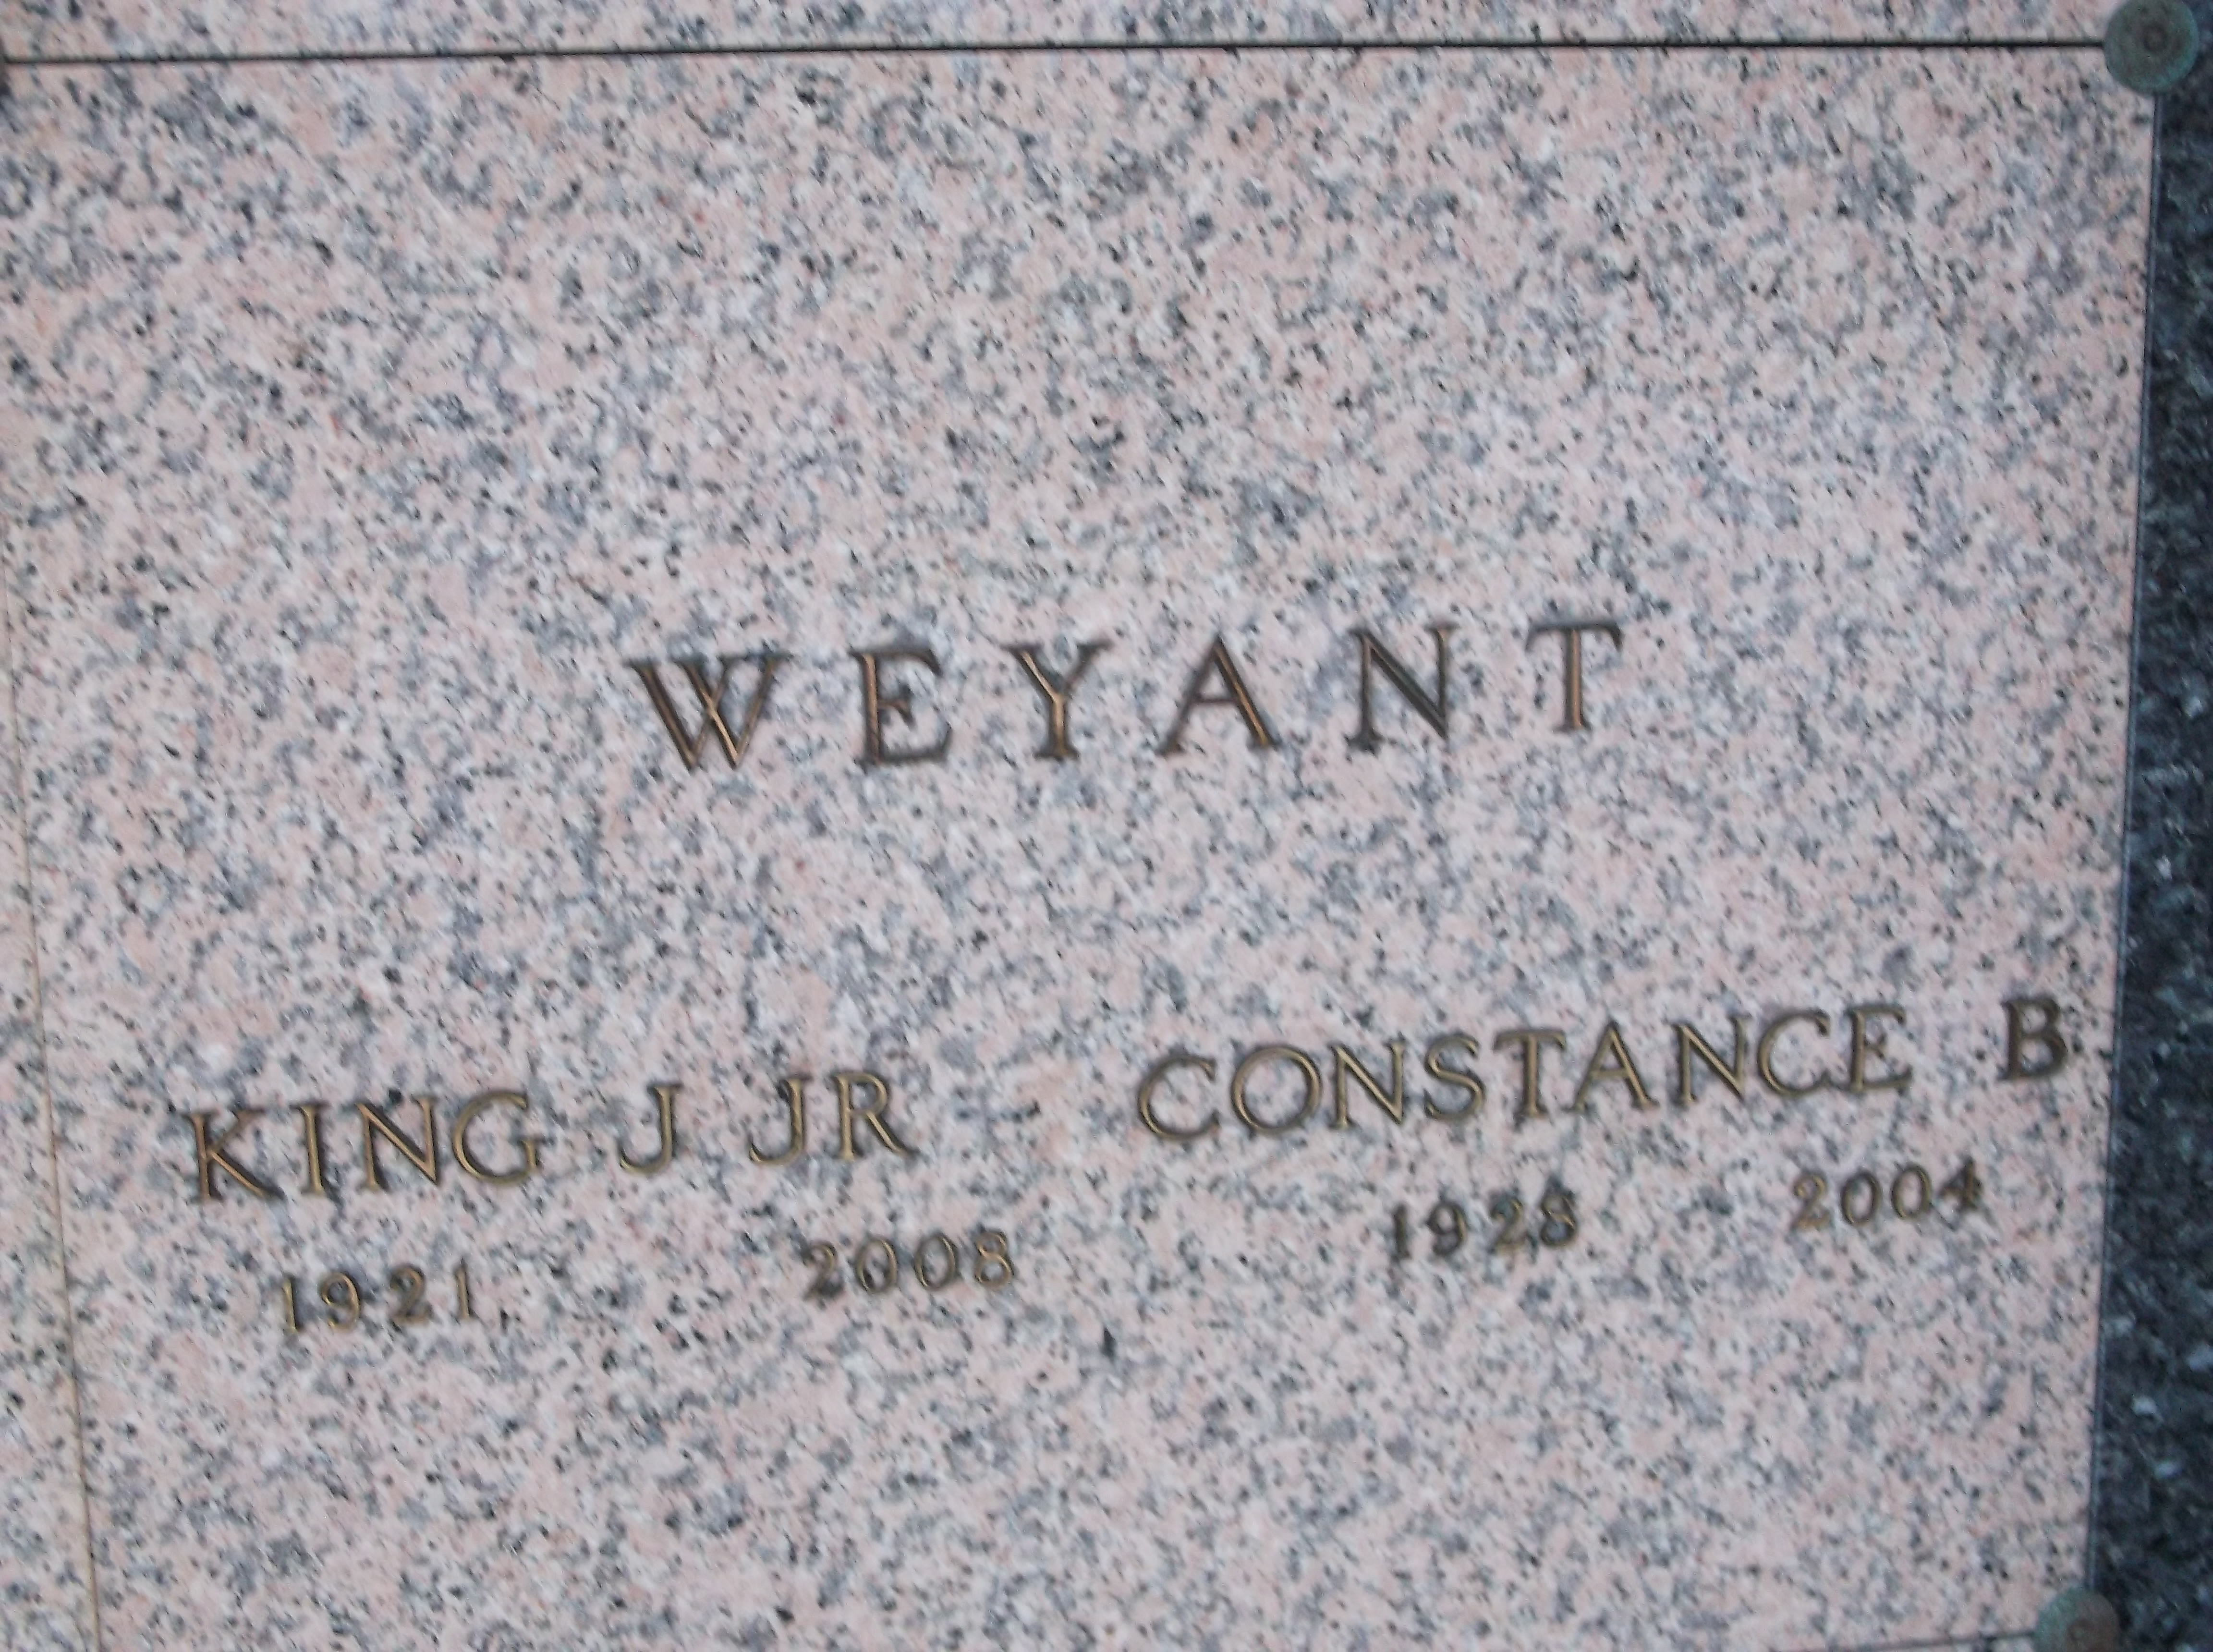 Constance B Weyant